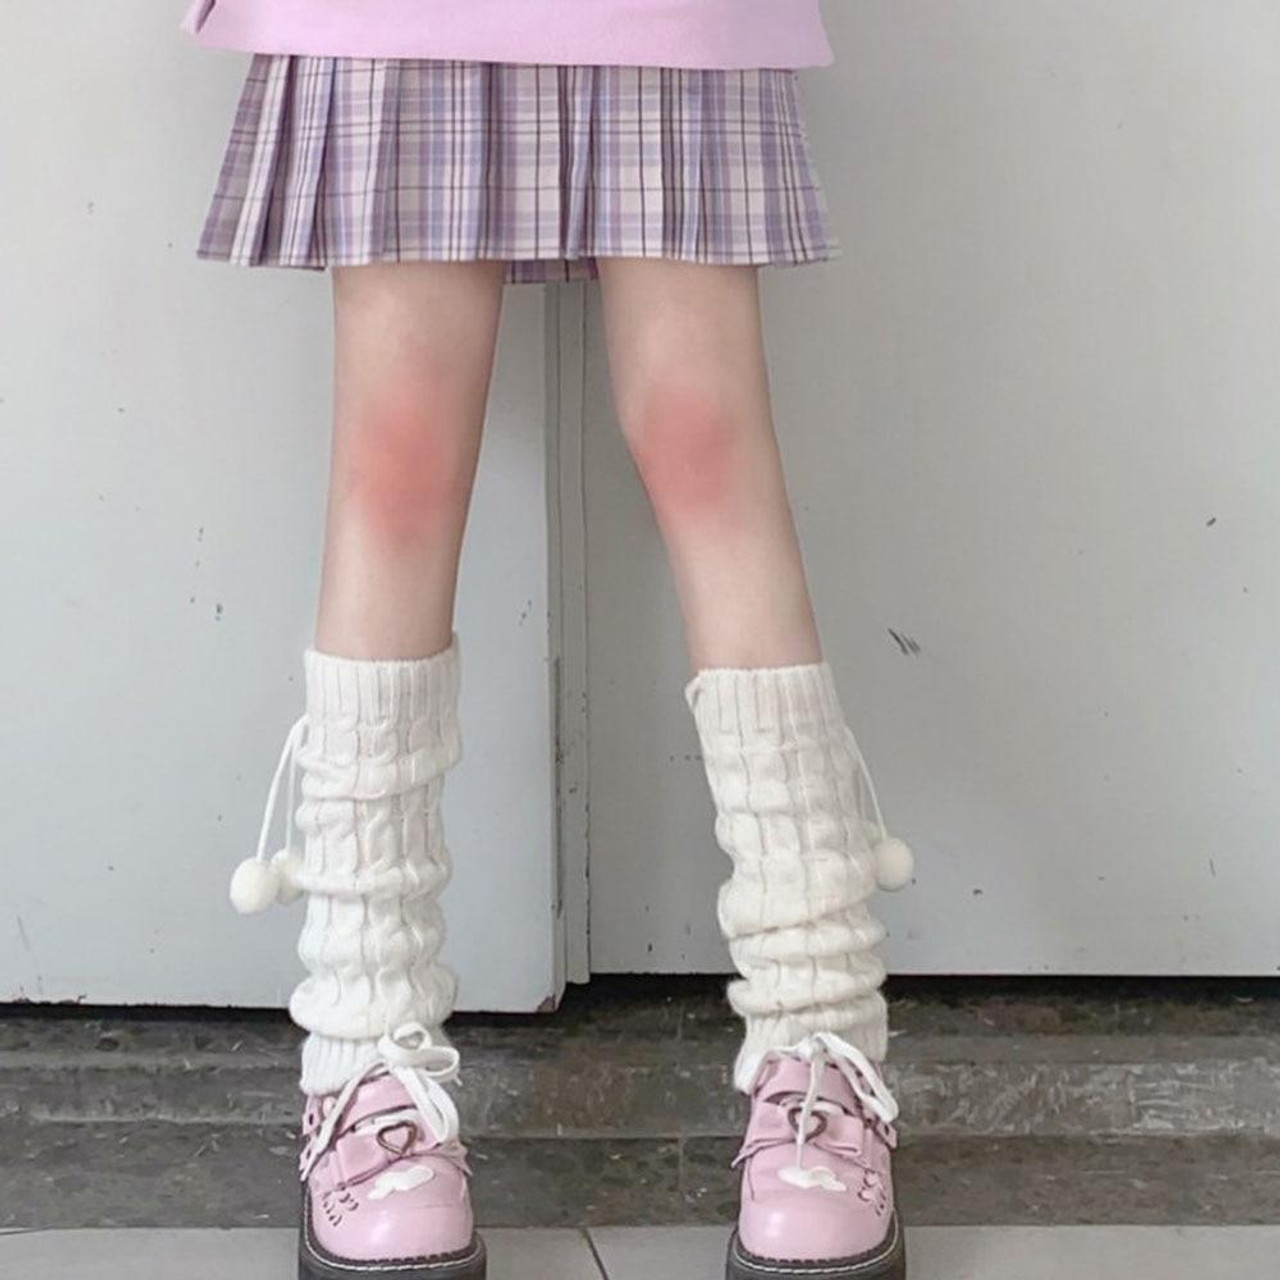 Kawaii Cute Knitted Leg Warmers  Girls leg warmers, Knitted leg warmers, Leg  warmers